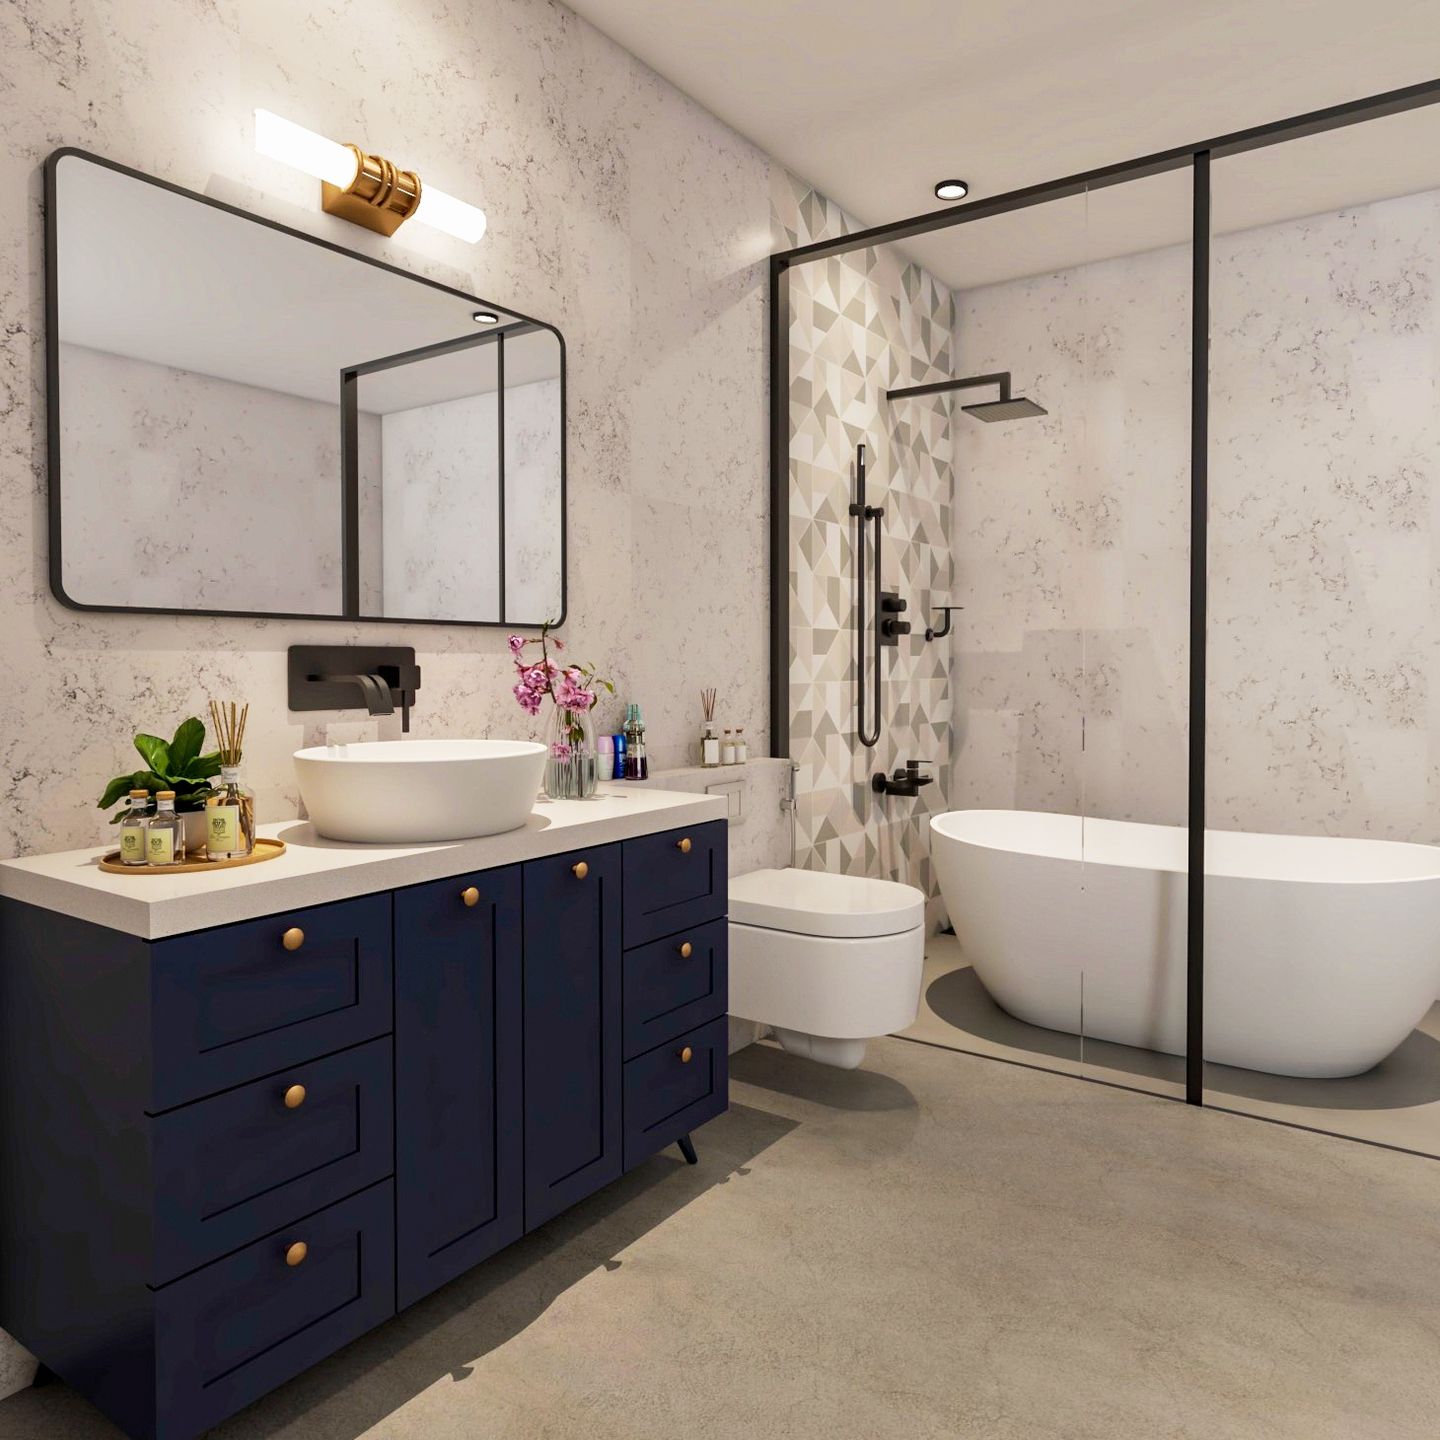 Small Bathroom Design With Dark Blue Vanity Unit - Livspace